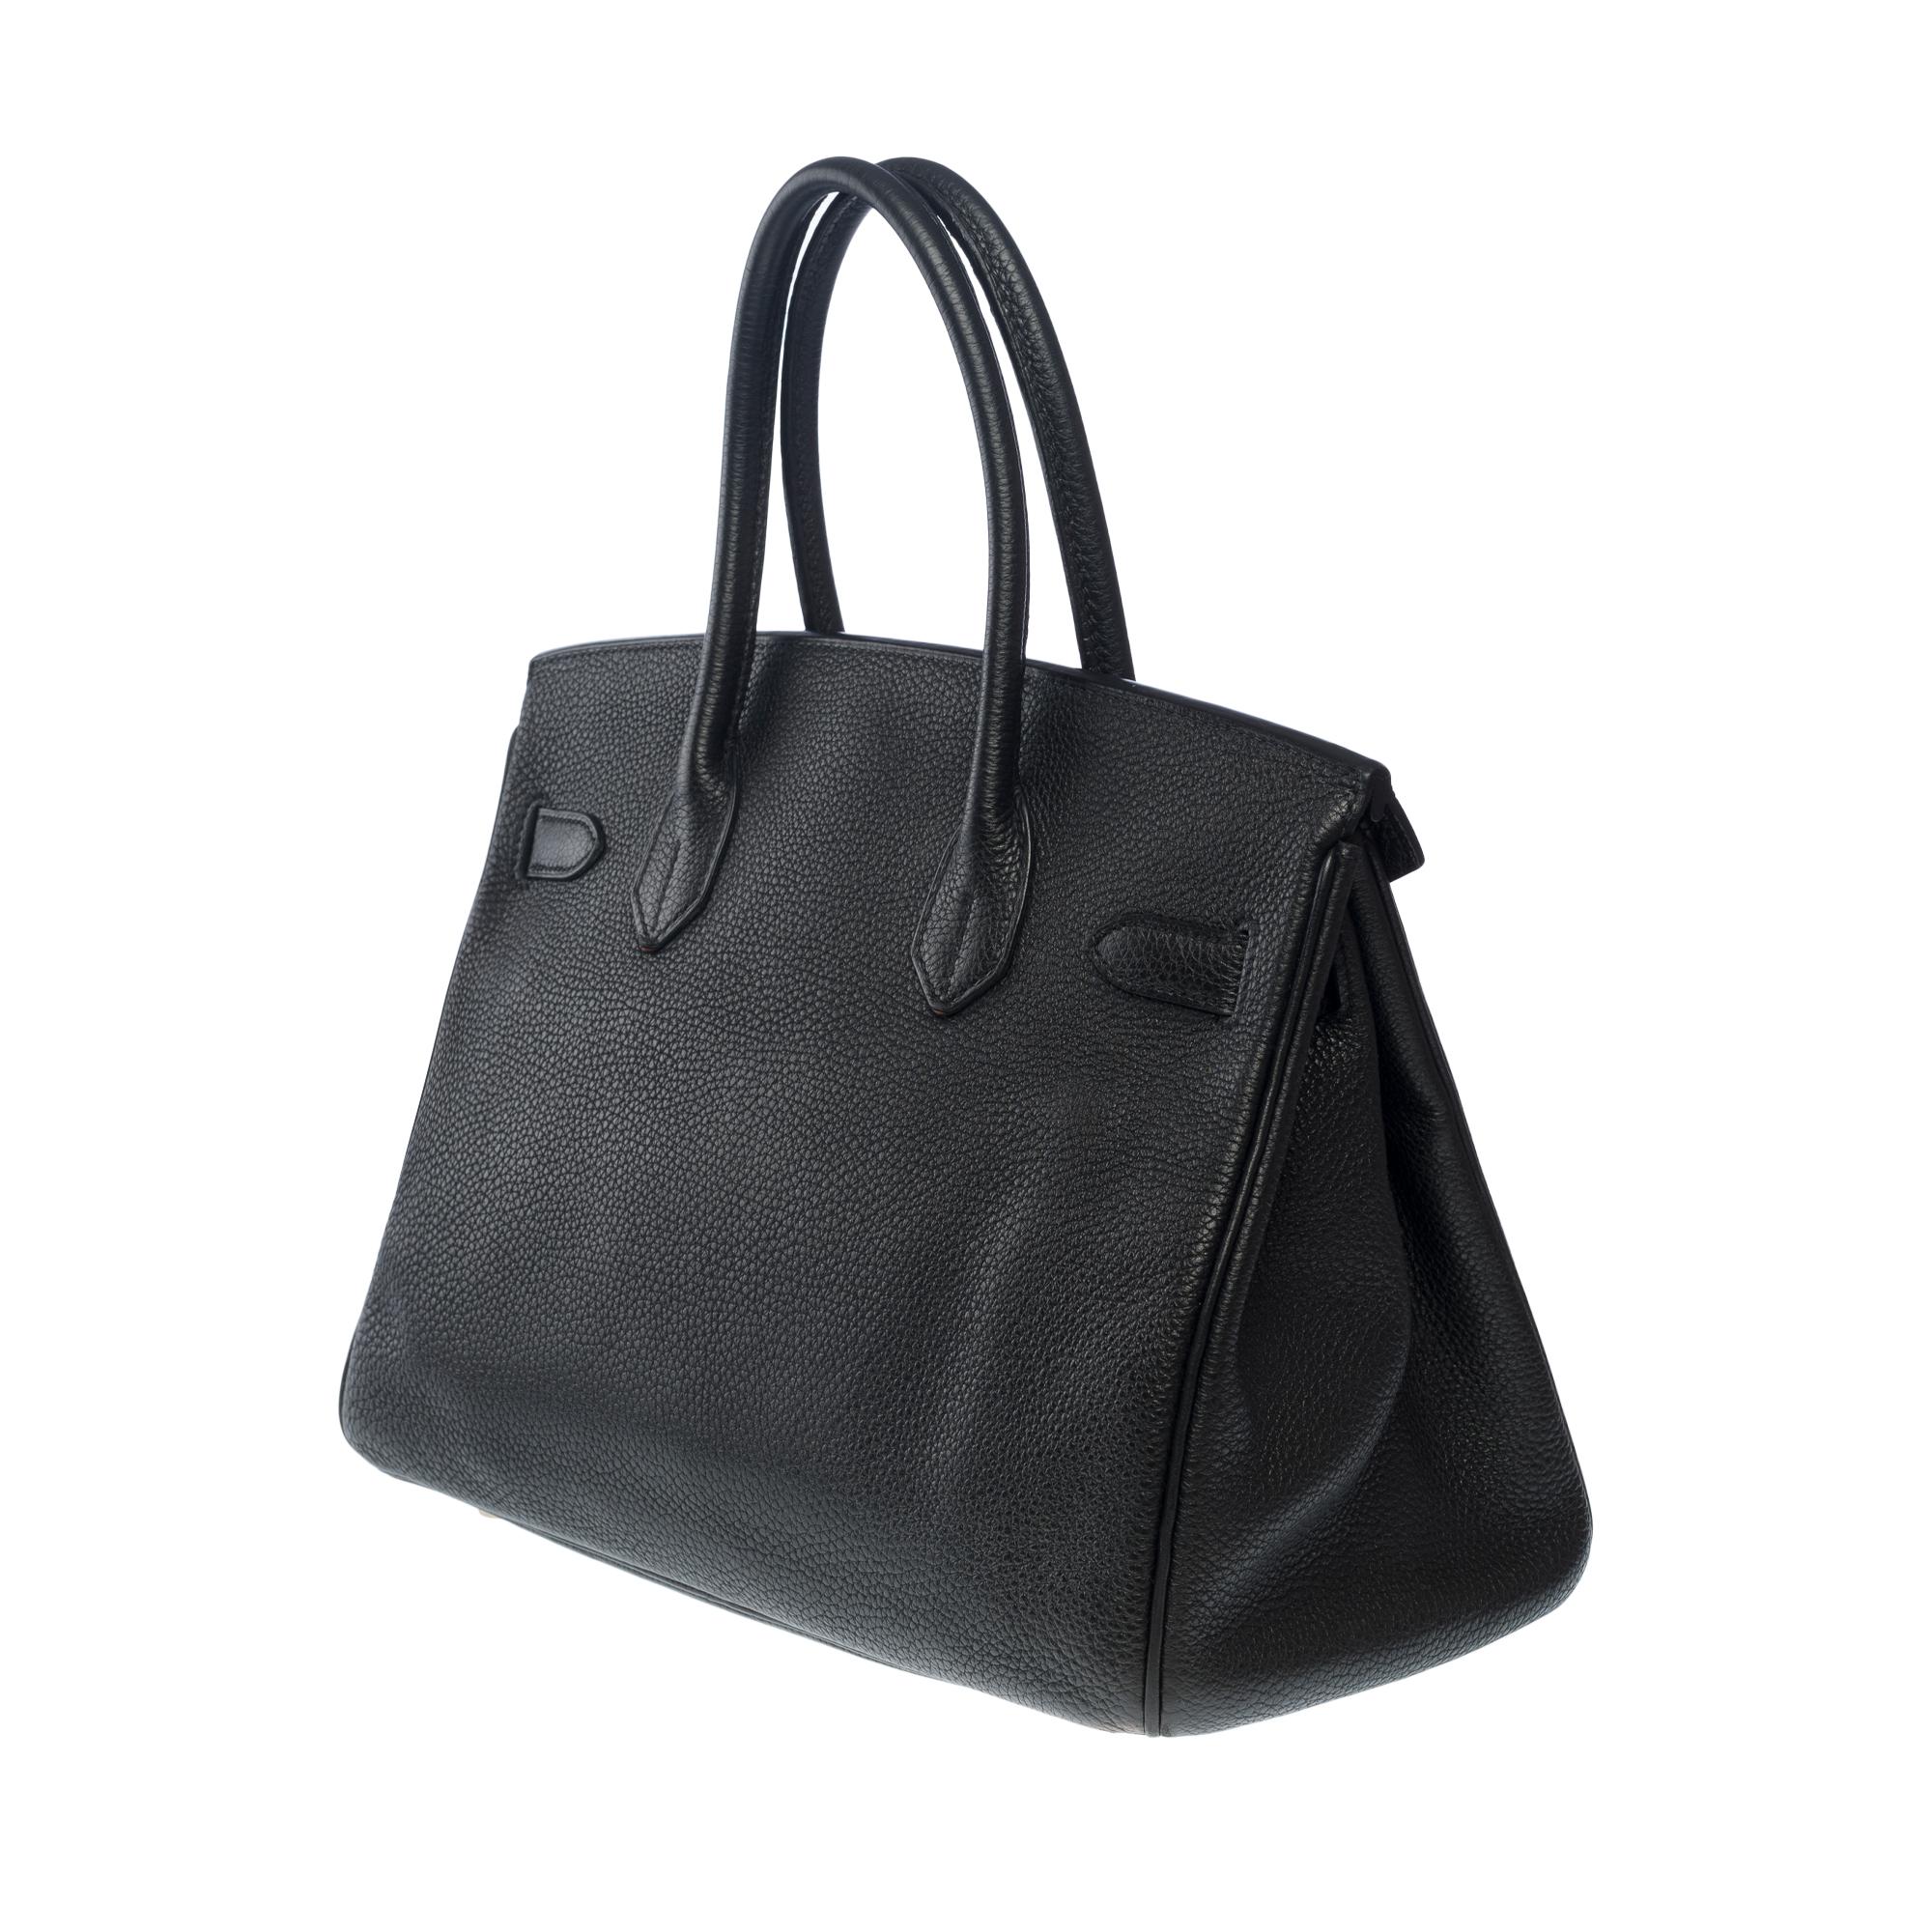 Stunning Hermes Birkin 30 handbag in Black Togo leather, GHW 3